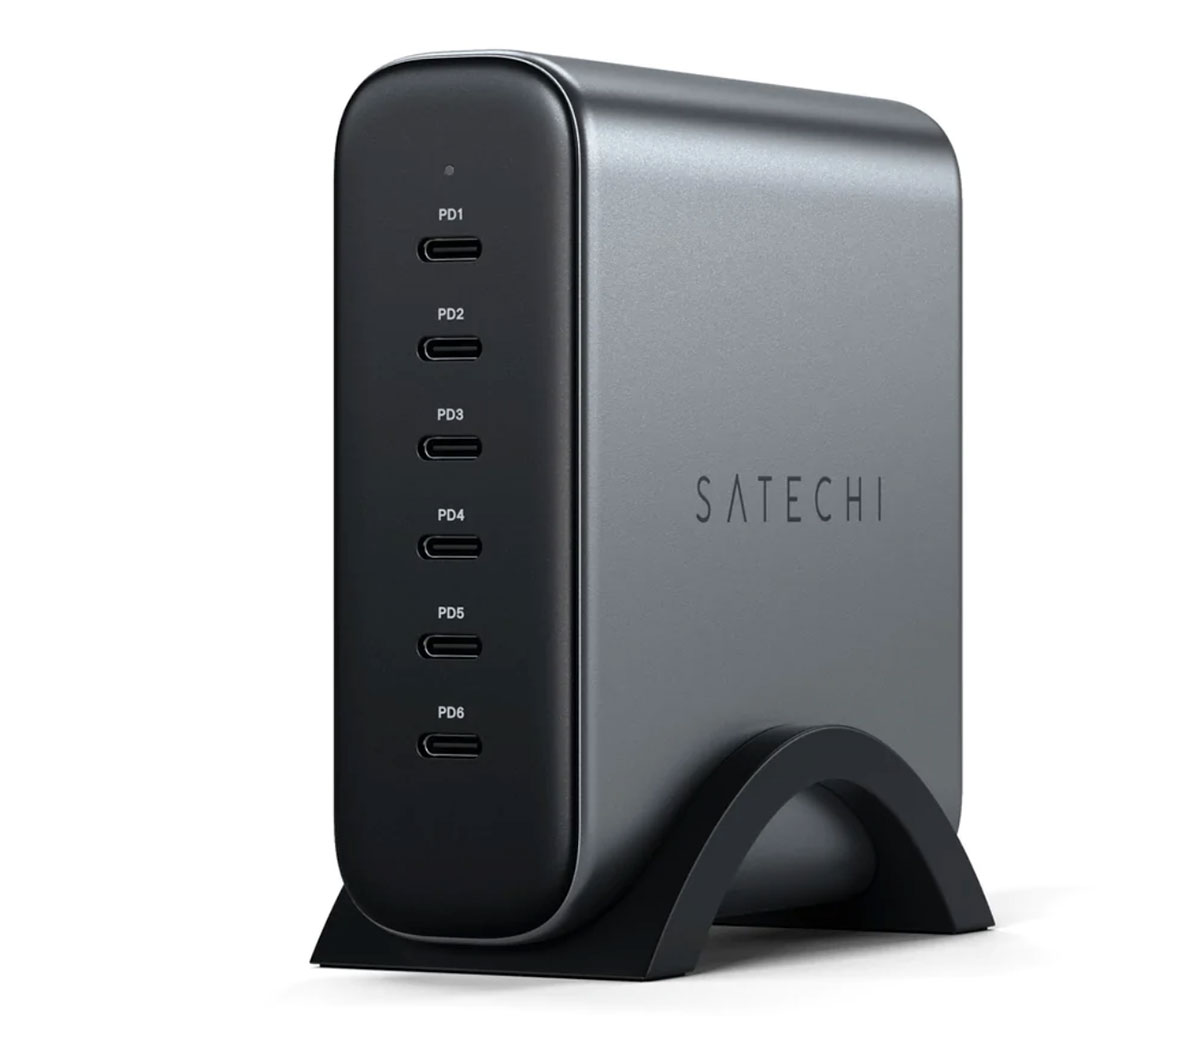 Satechi 200W USB-C 6-port PD GaN Charger – Best 200W USB-C Desktop Charger for 16-inch MacBook Pro